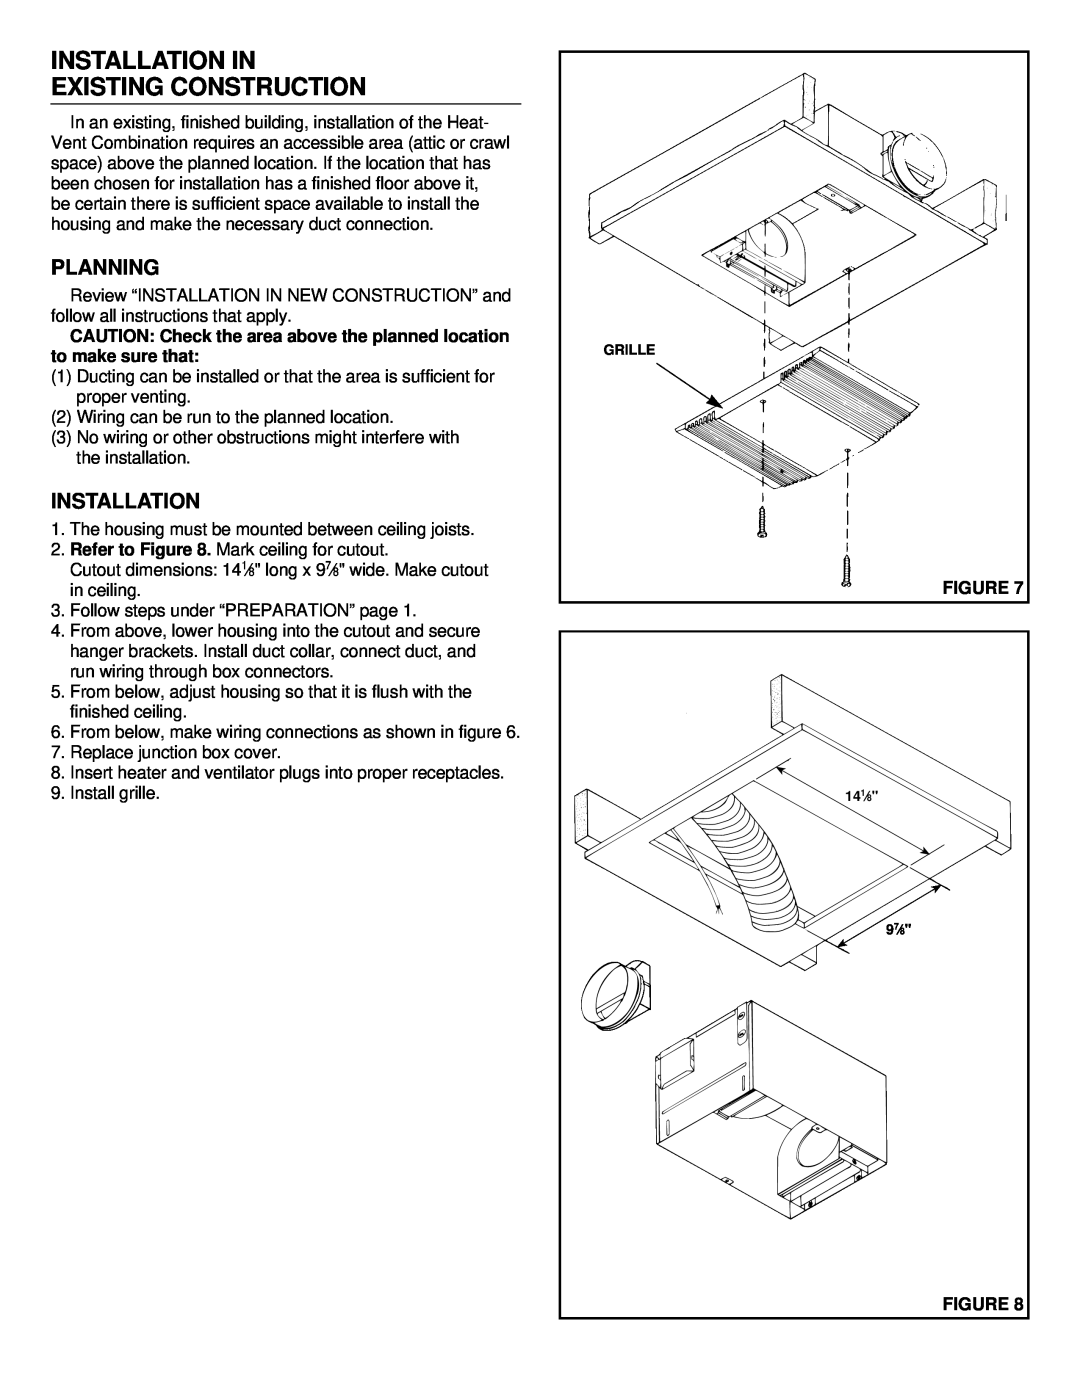 NuTone 9905 installation instructions Installation In Existing Construction, Planning 